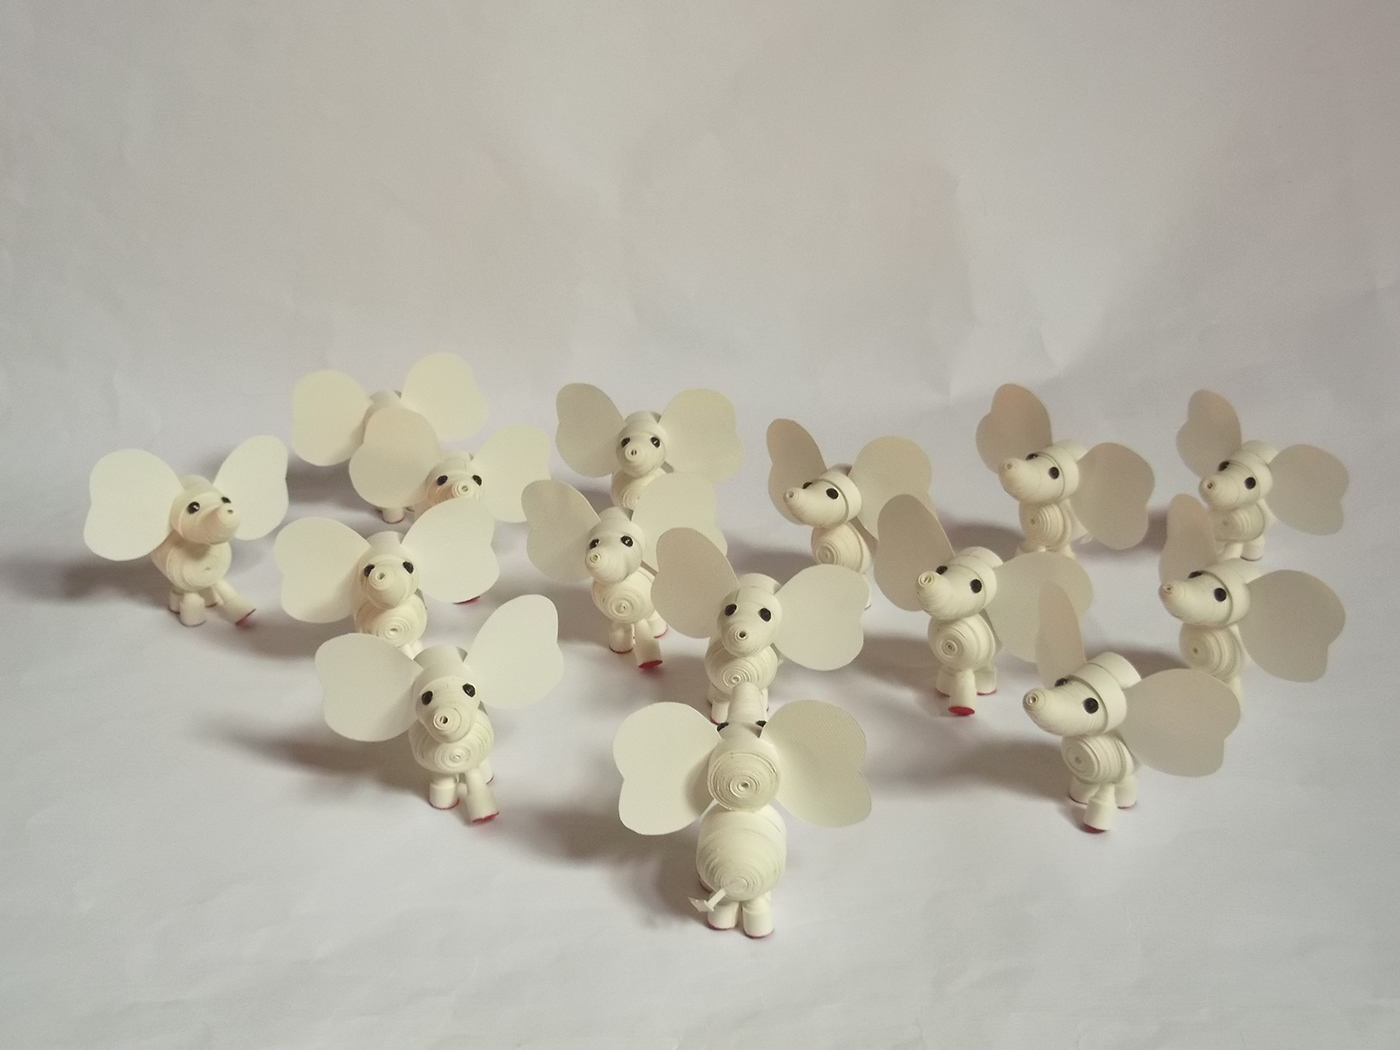 quilling paper sculpture handmade elephants miniatures 3d sculpture paper graduation day